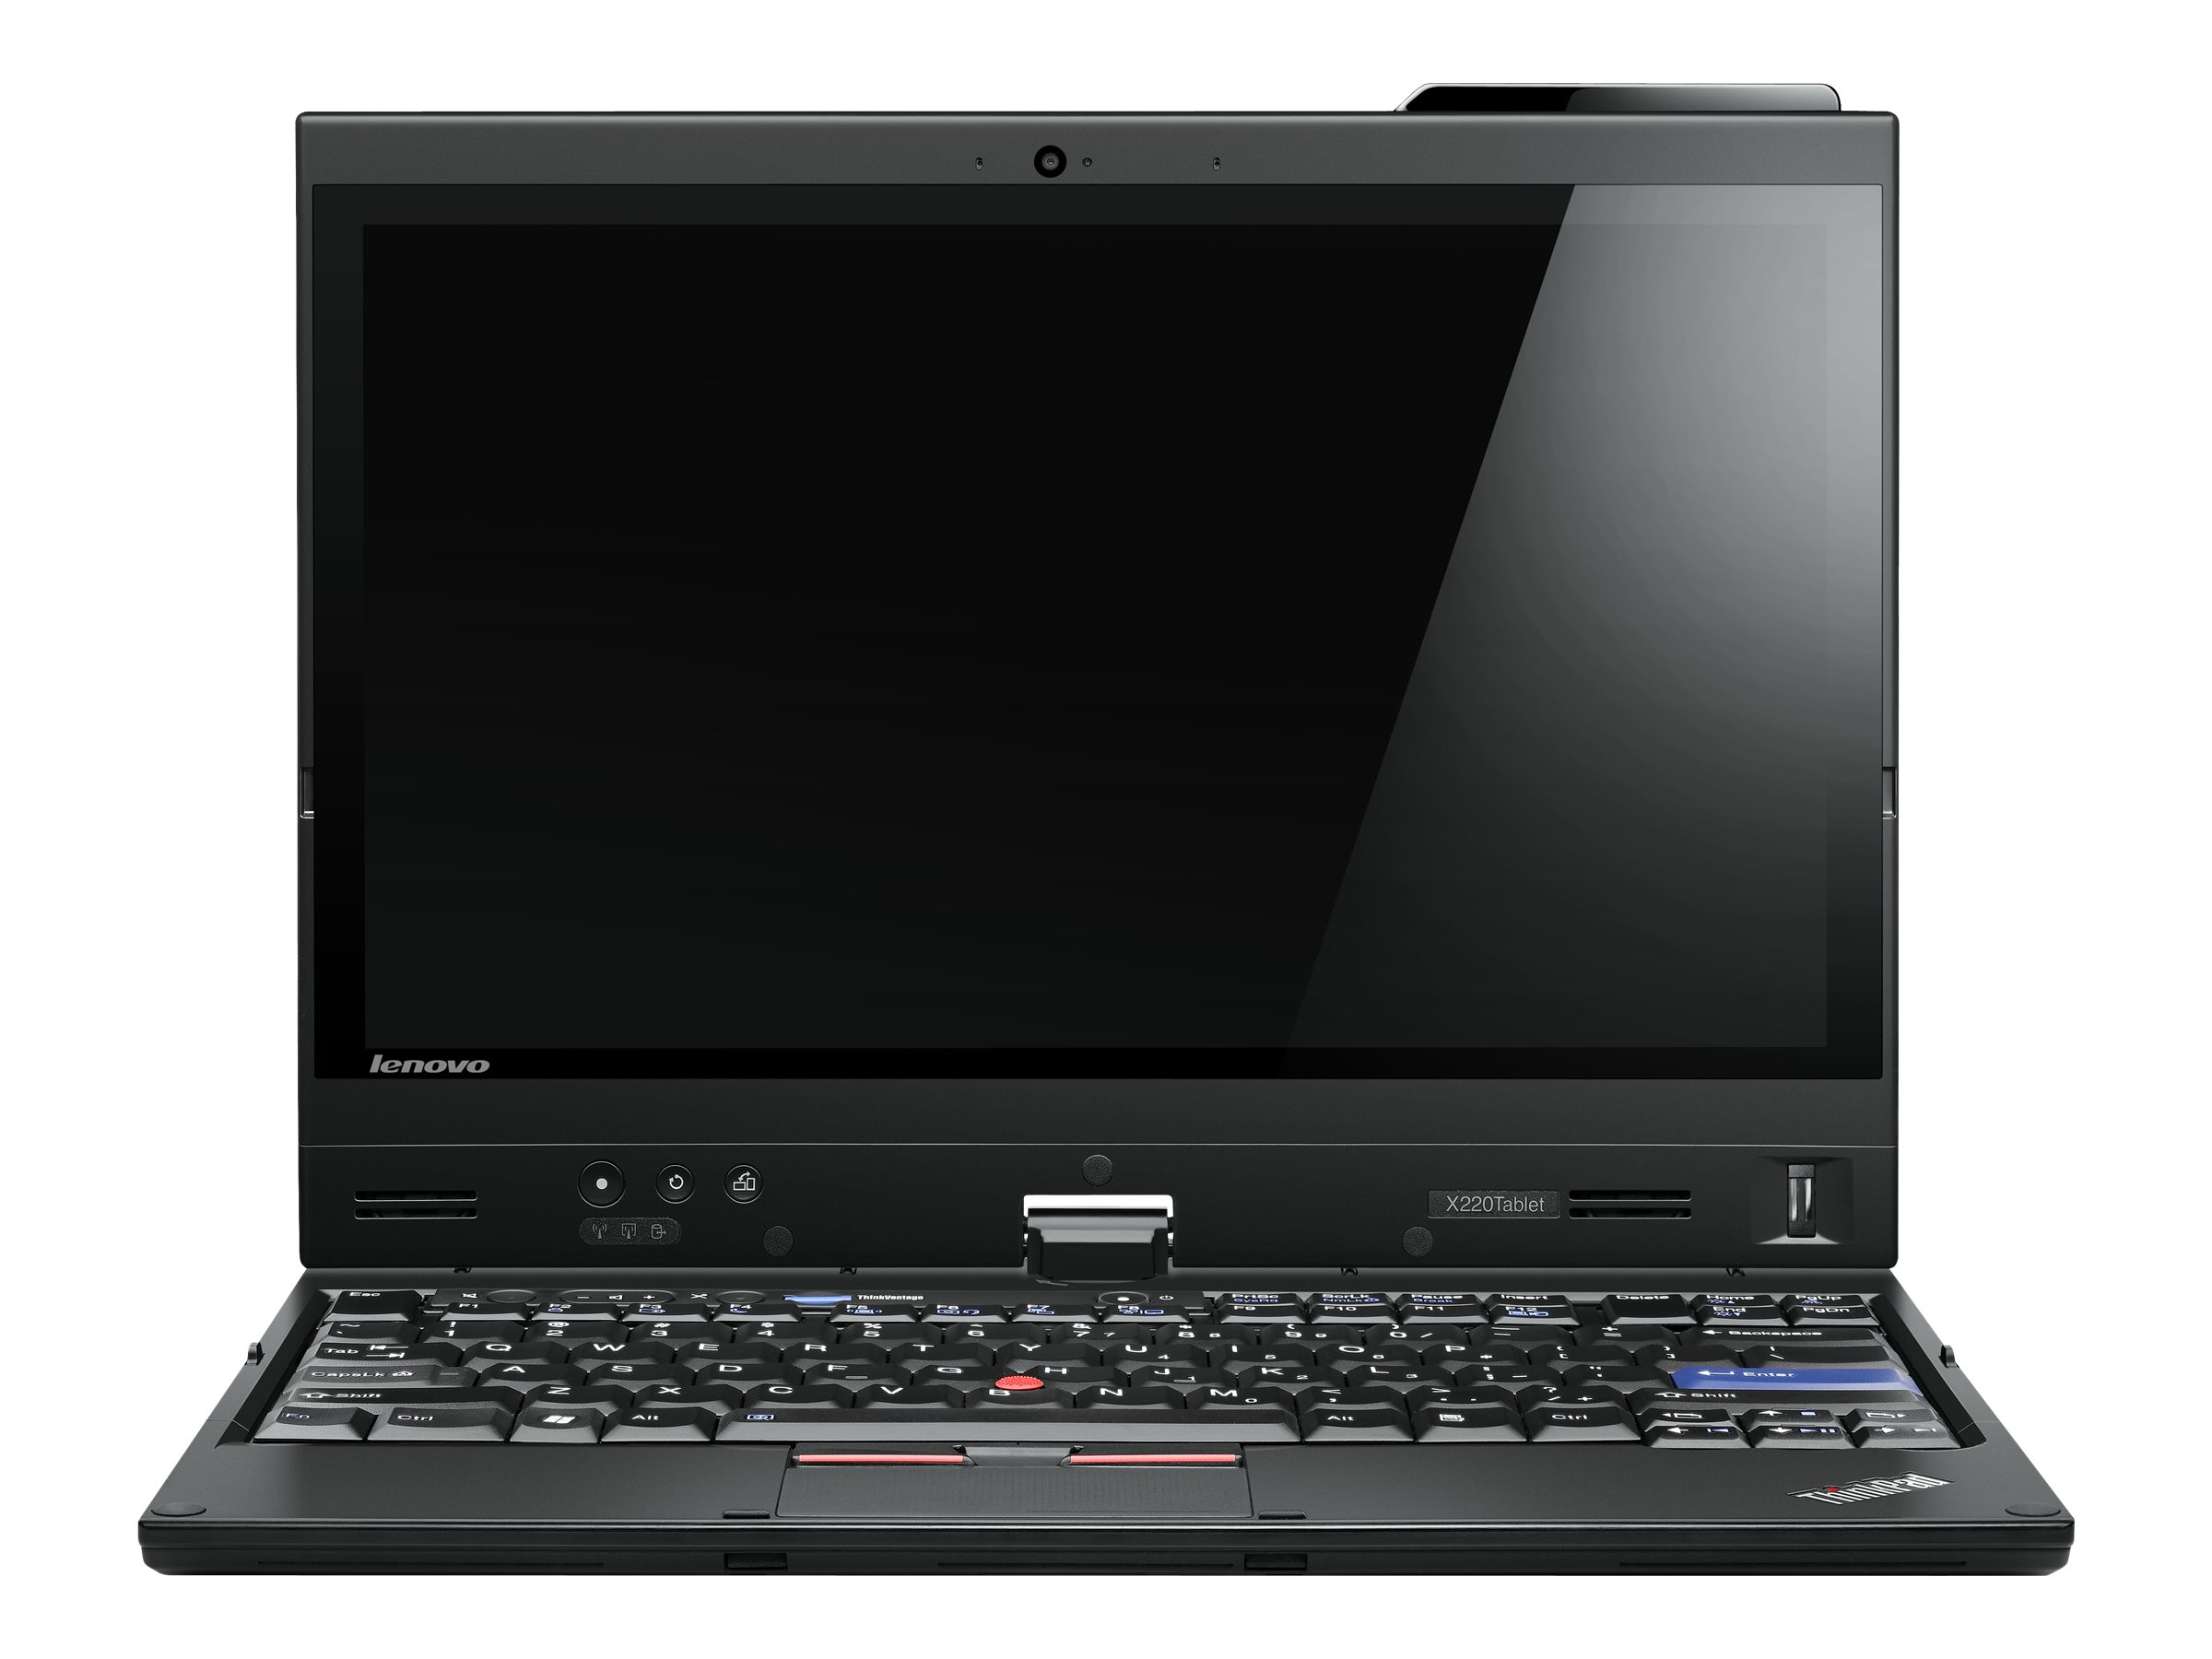 Lenovo ThinkPad X220 Tablet (4299)